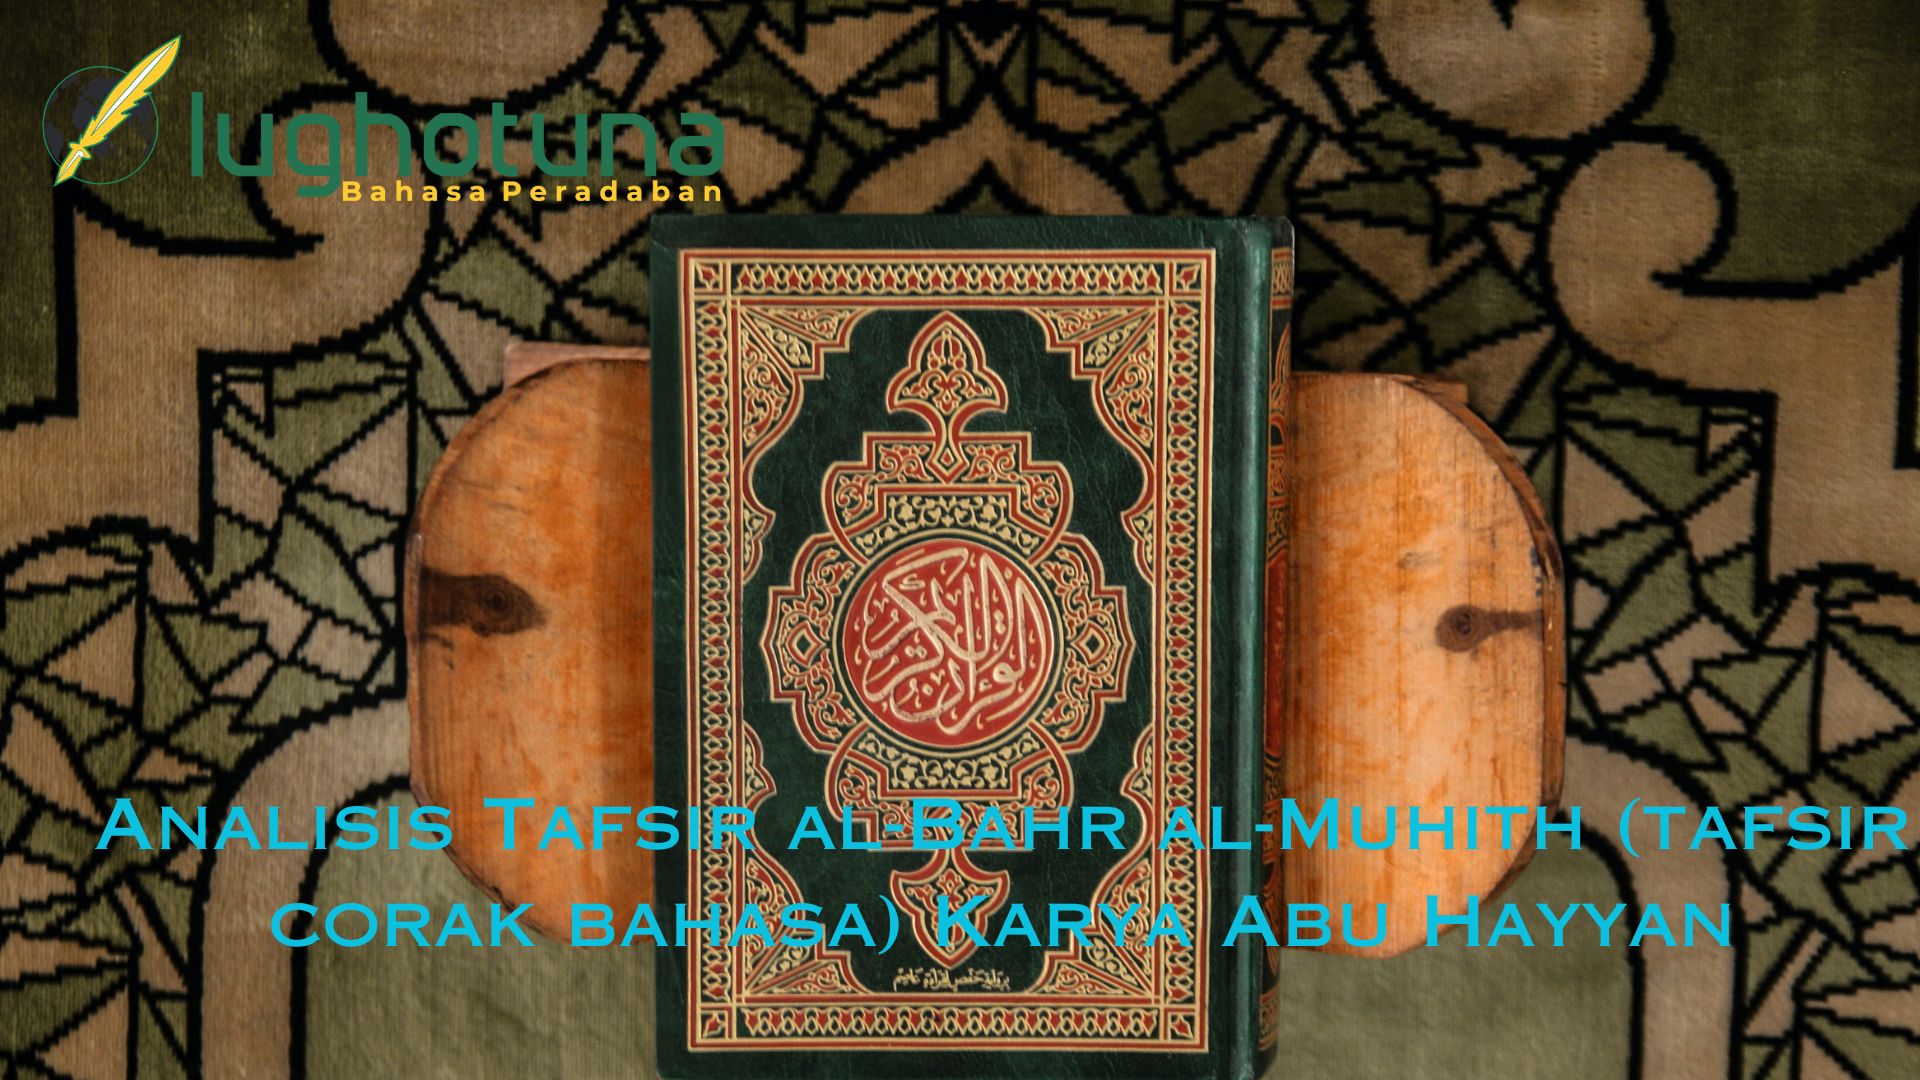 Analisis Tafsir al-Bahr al-Muhith (tafsir corak bahasa) Karya Abu Hayyan